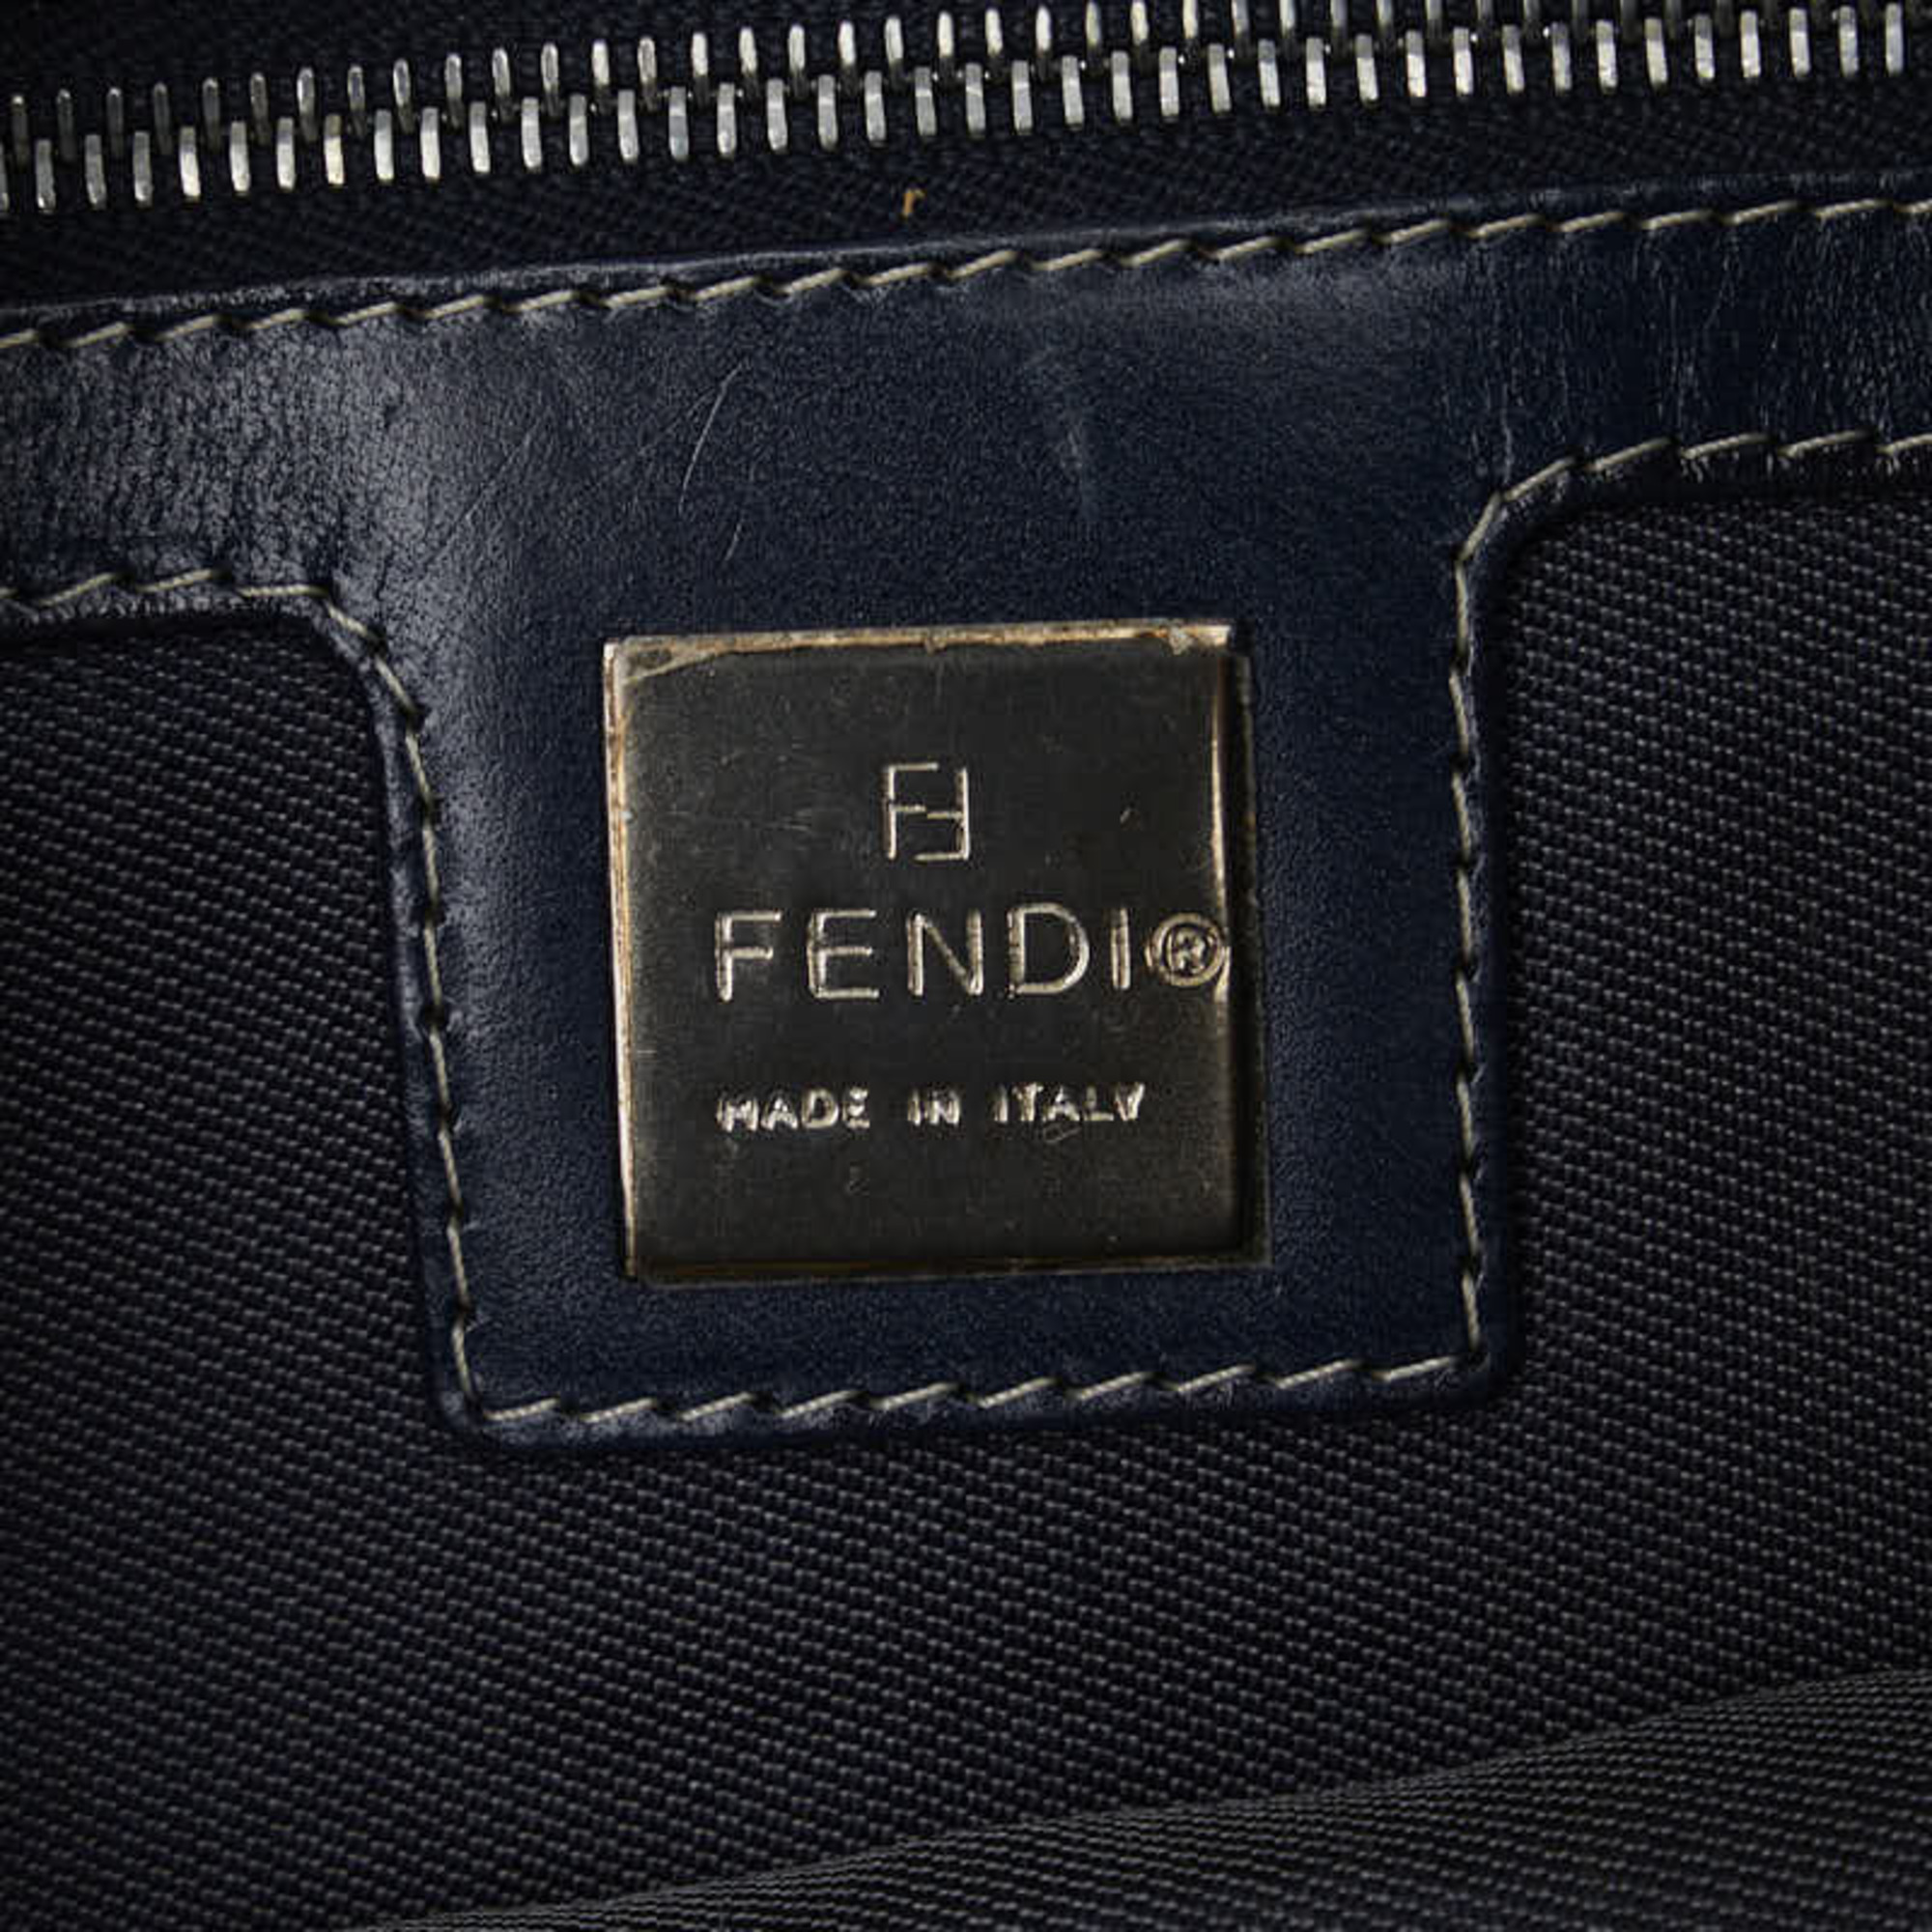 FENDI metal fittings tote bag shoulder 26761 navy canvas leather women's